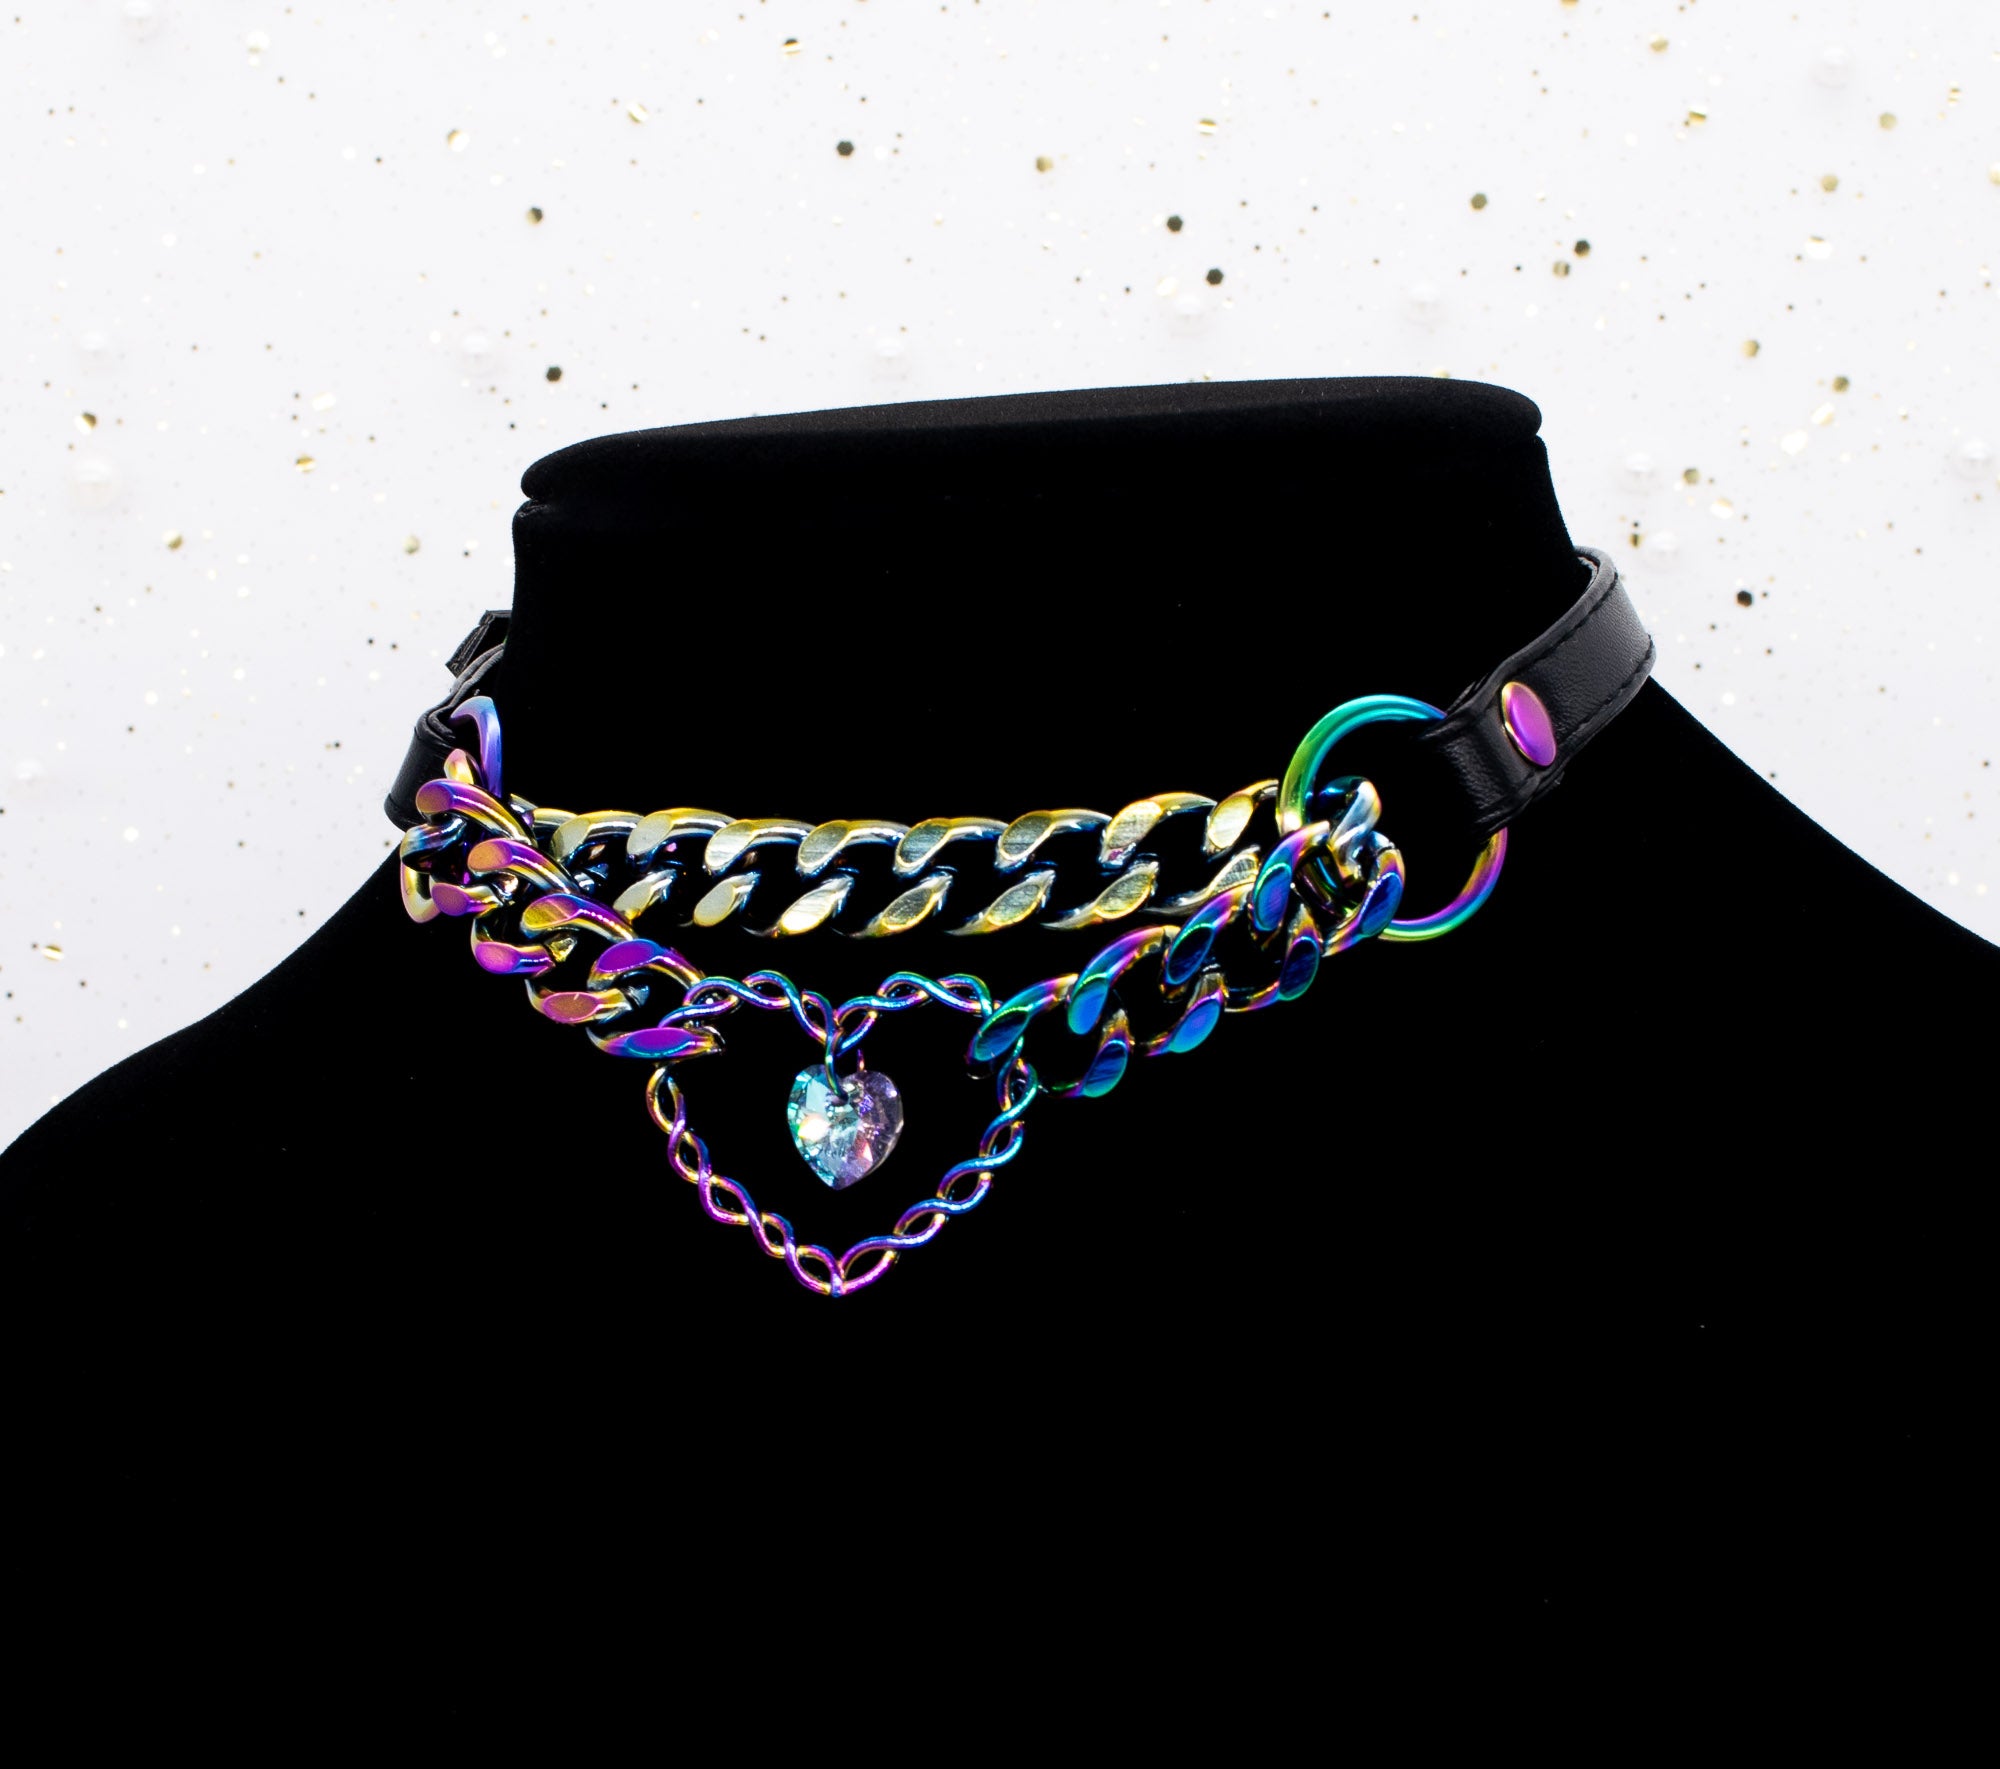 Swarovski Heart Ring Black Vegan Leather Martingale Collar in Rainbow